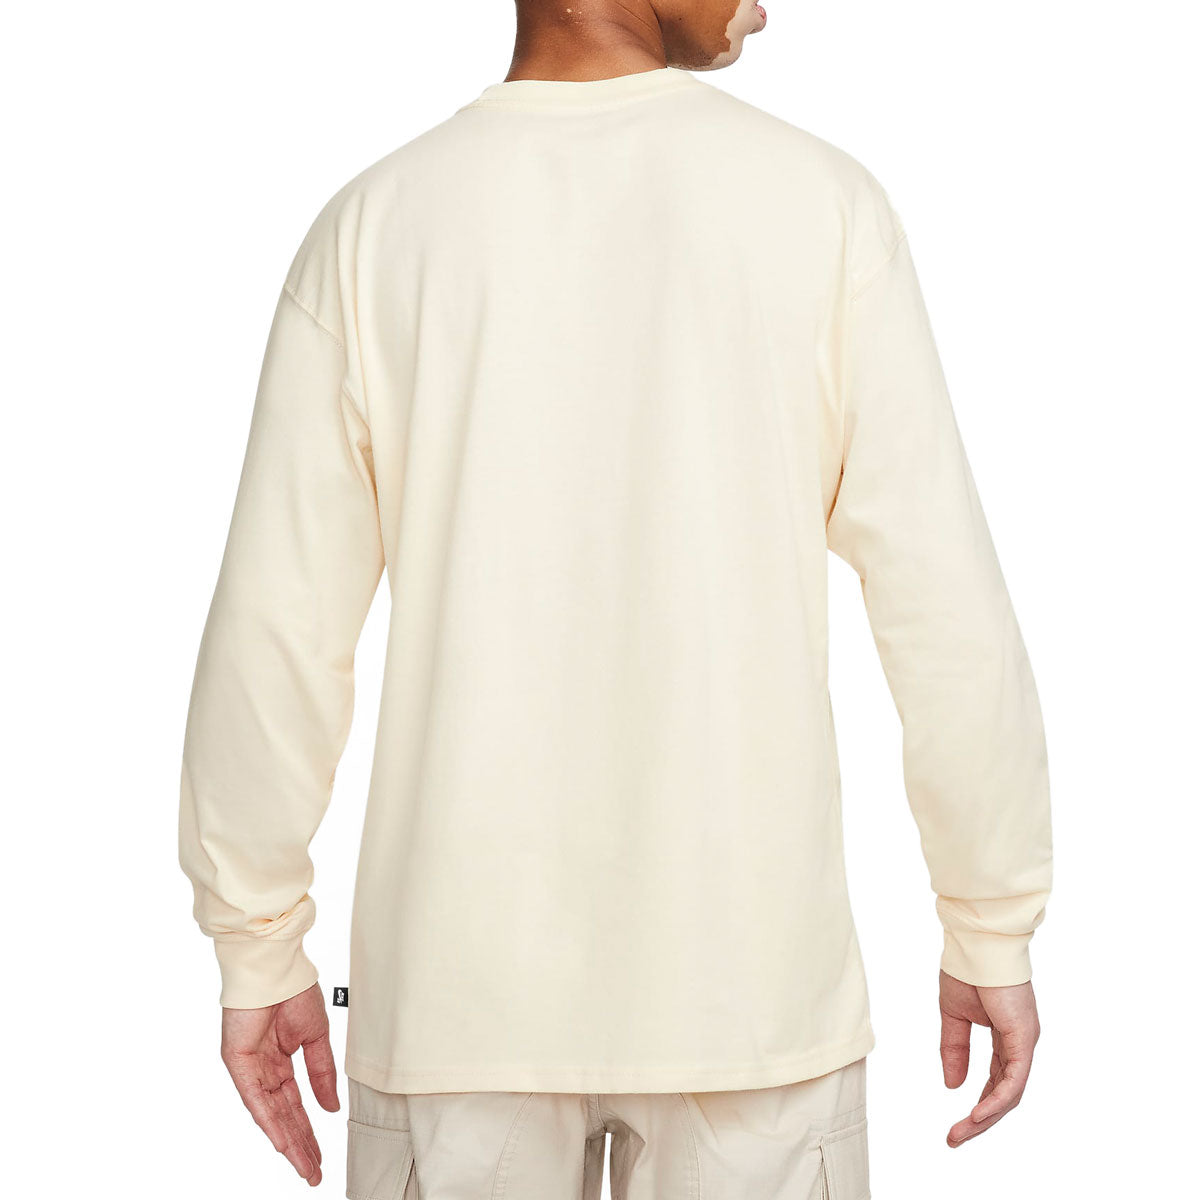 Nike SB The Reach Long Sleeve T-Shirt - Coconut Milk image 3